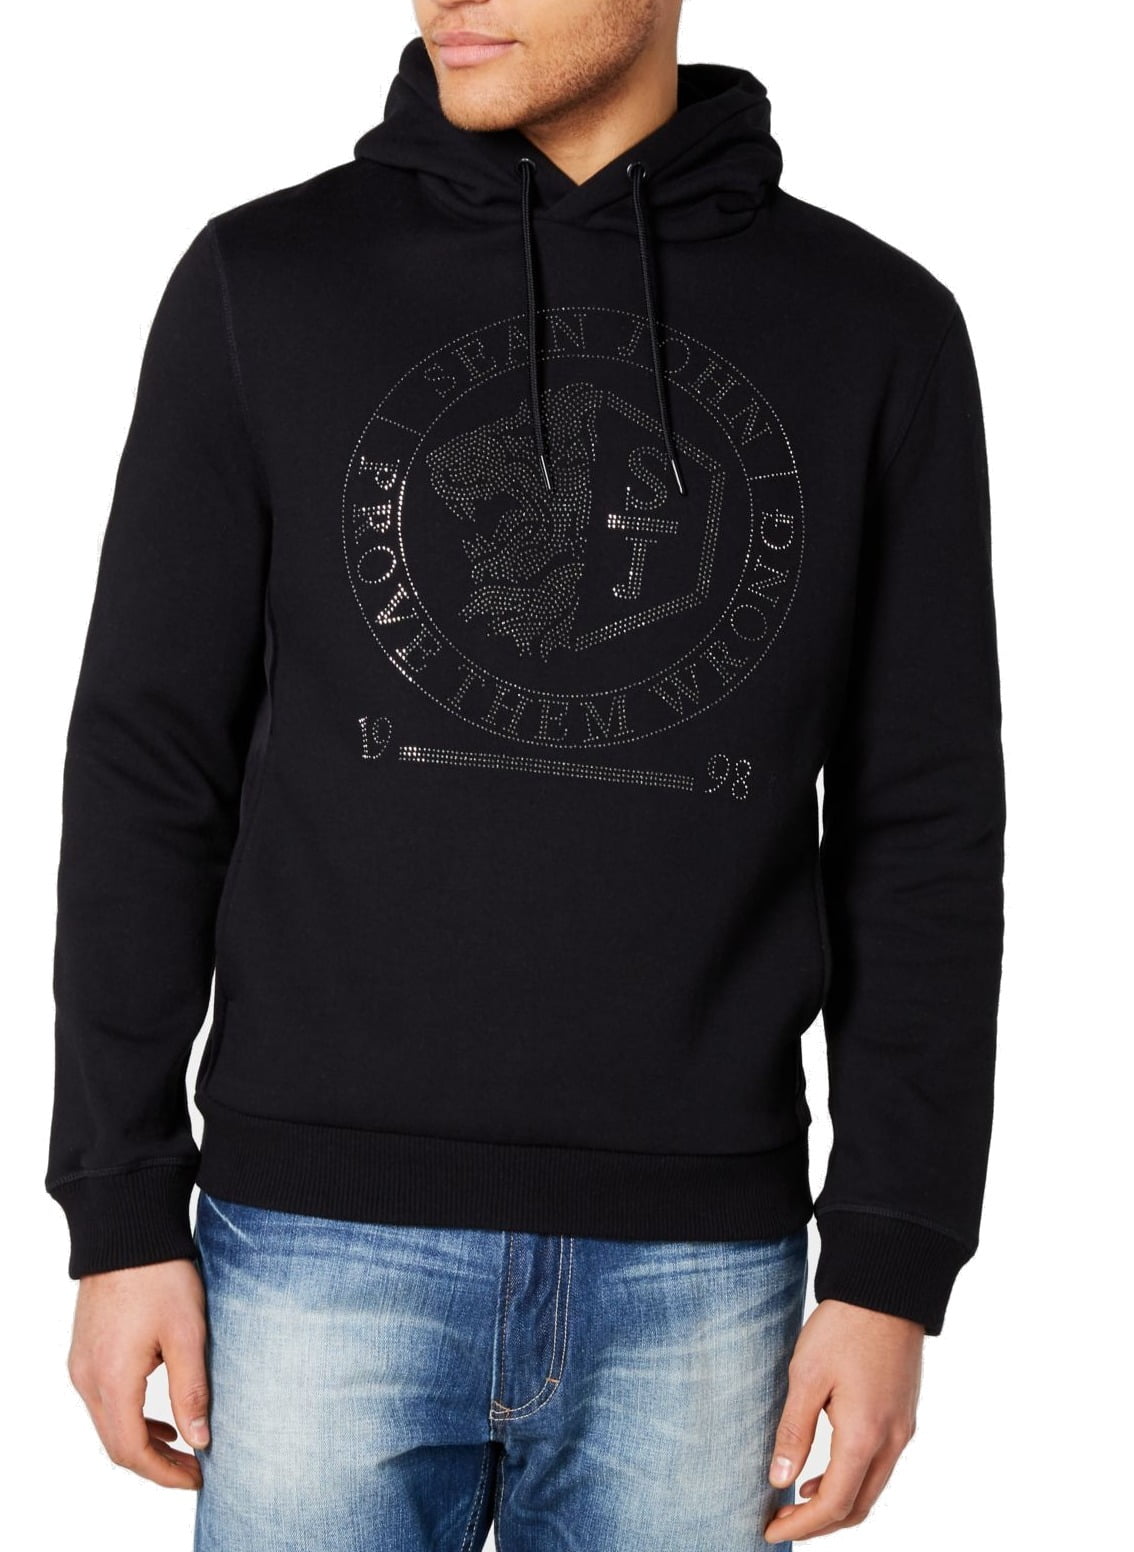 Sean John Hoodies & Sweatshirts - Men's Sweater Lion Crest Graphic ...